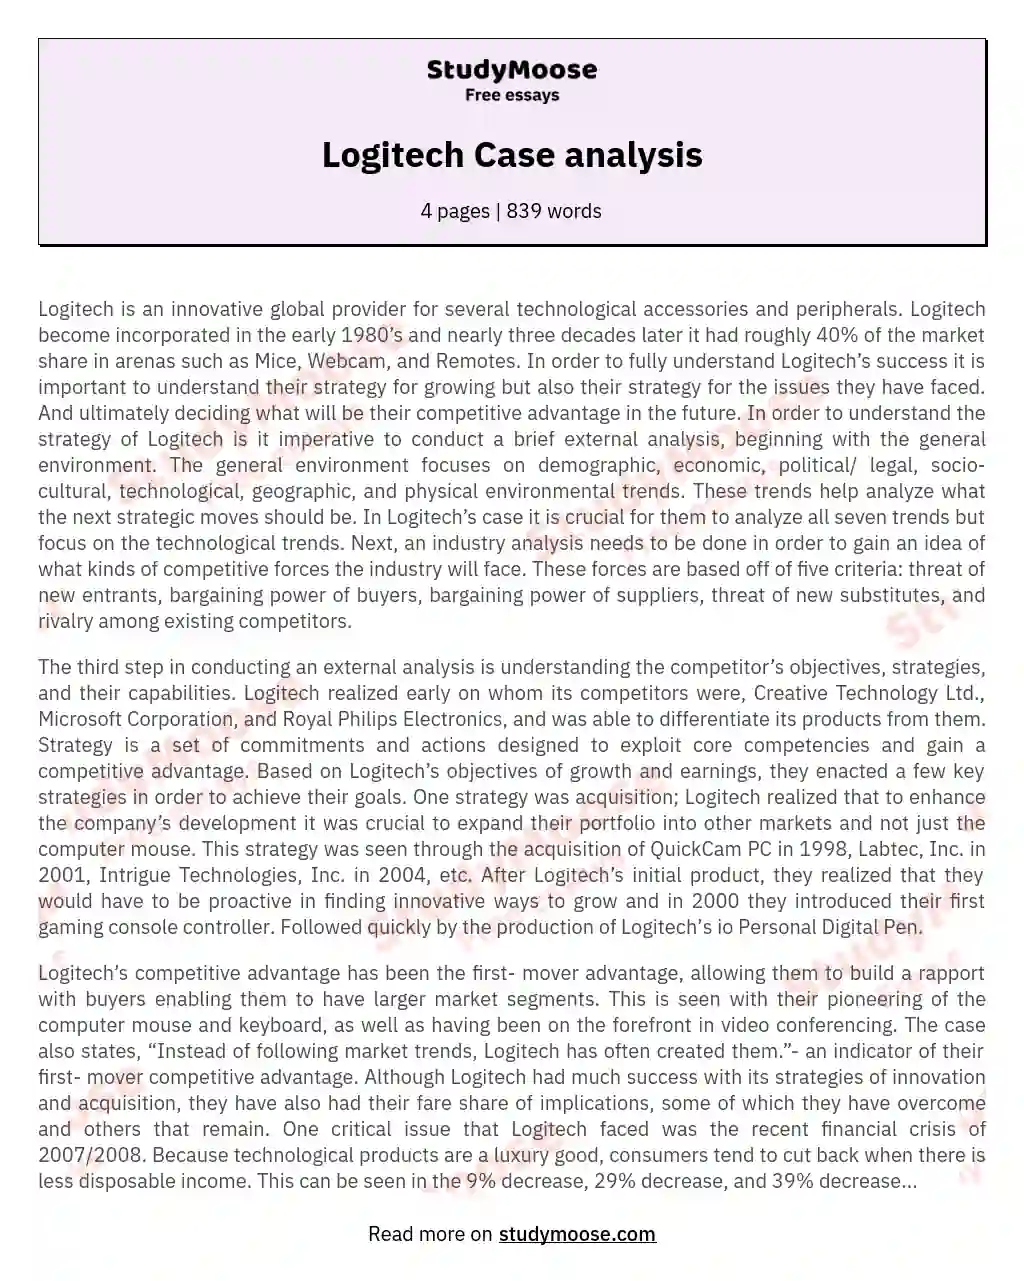 Logitech Case analysis essay